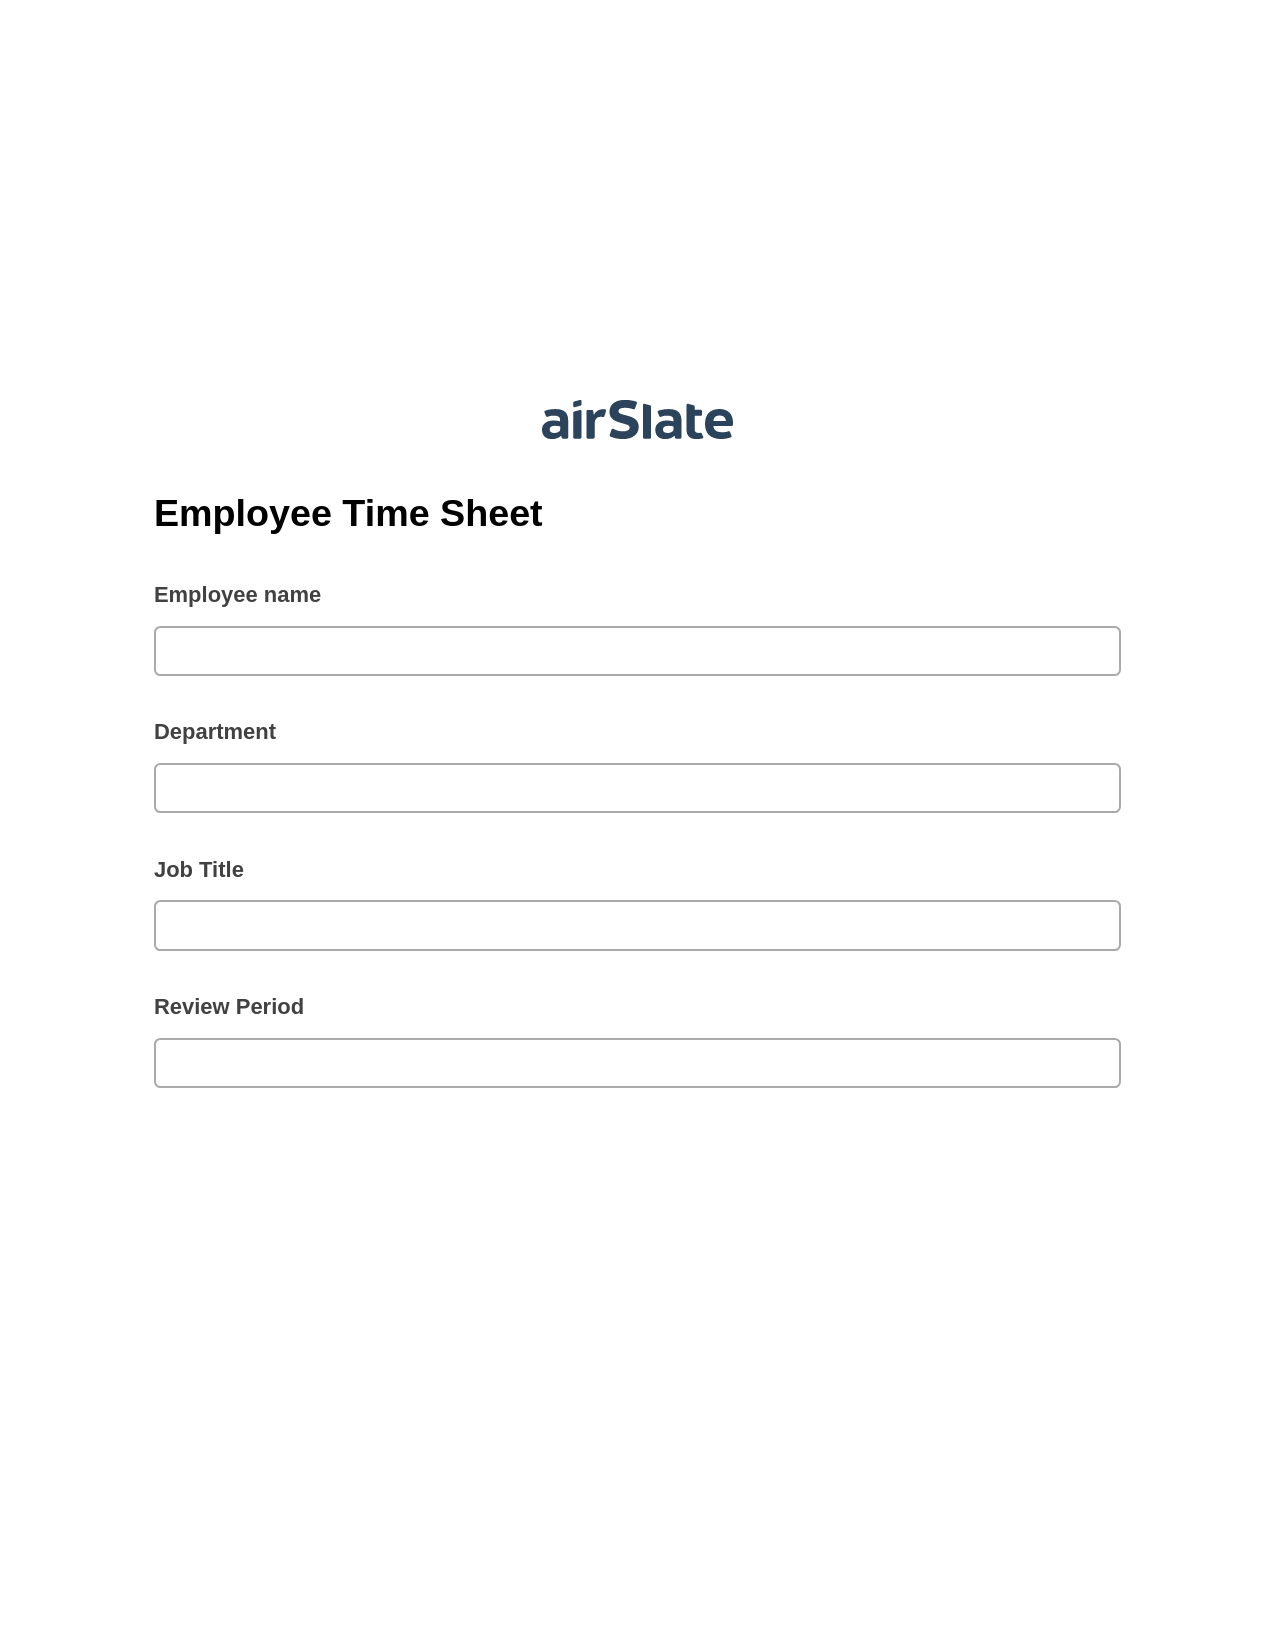 Multirole Employee Time Sheet Pre-fill from CSV File Bot, Update Audit Trail Bot, Slack Two-Way Binding Bot